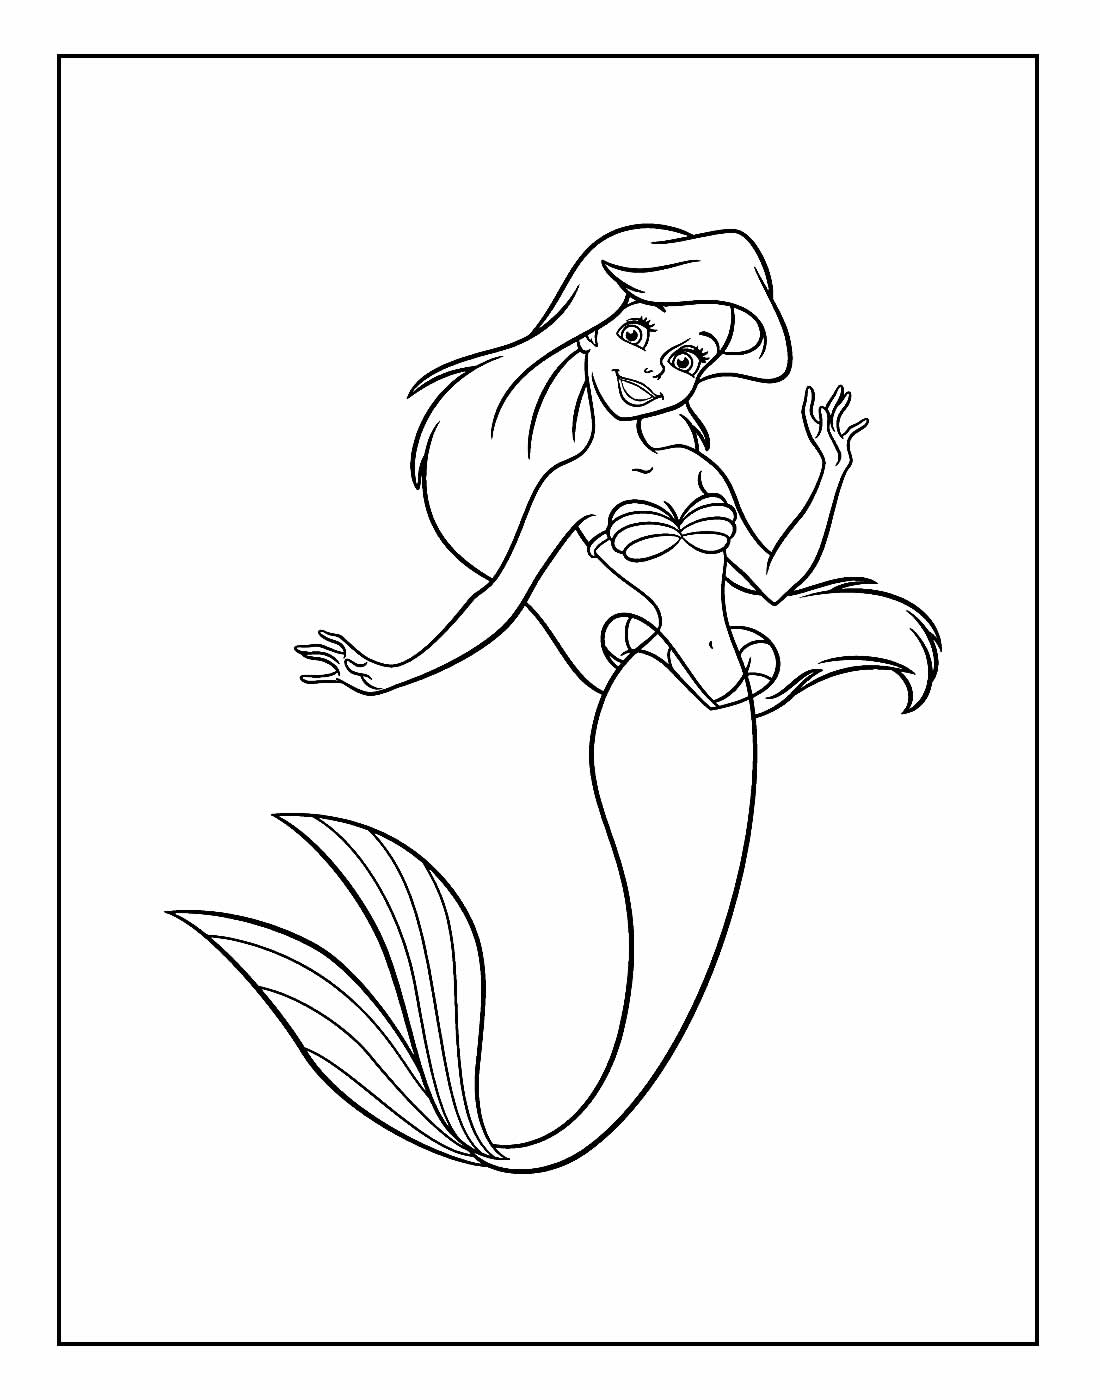 Desenhos para colorir da Pequena Sereia - Princesa Ariel